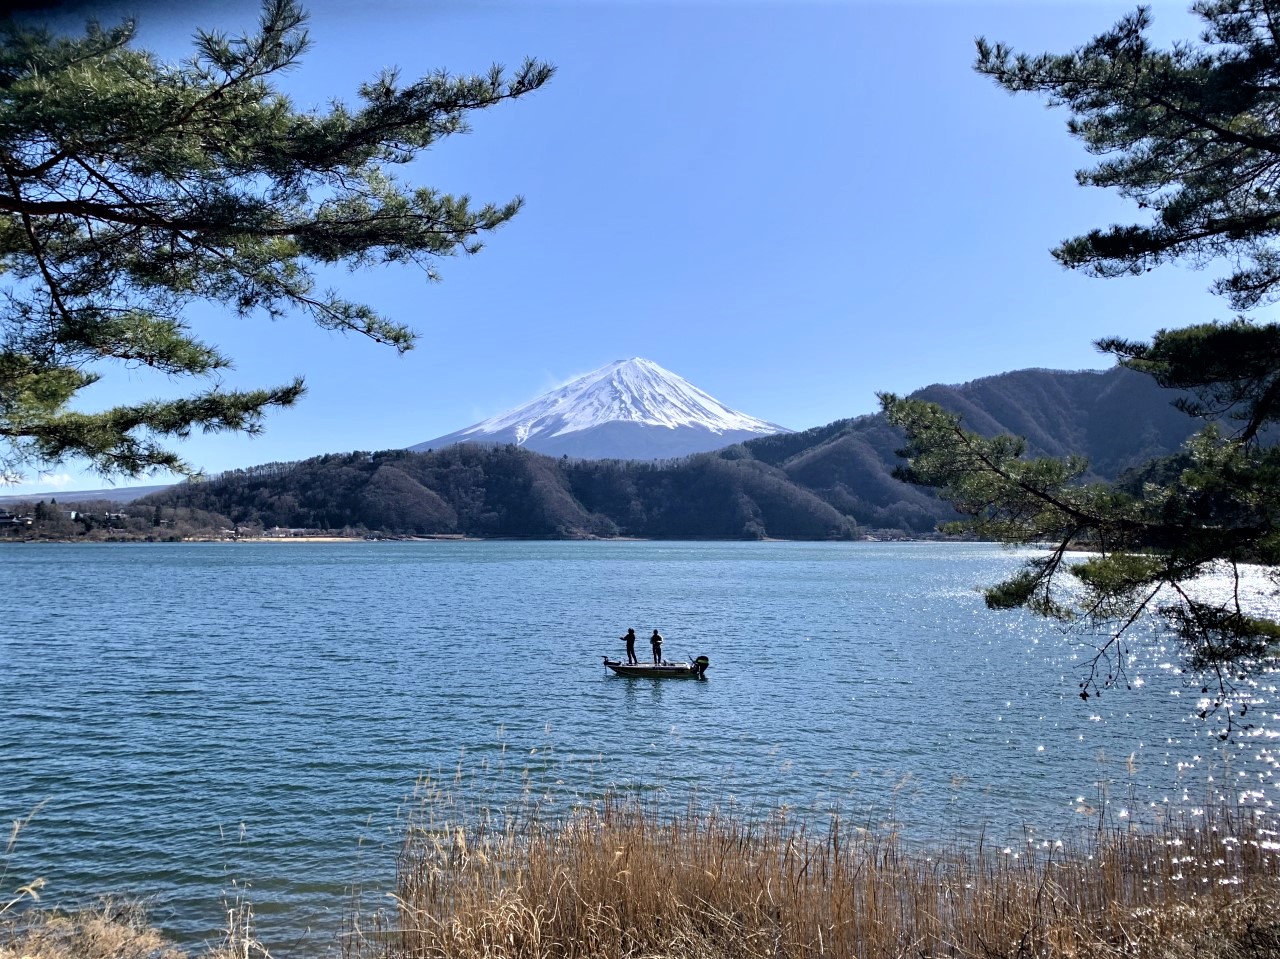 https://betifulworld.com/wp-content/uploads/2021/11/Mount-Fuji-1.jpg